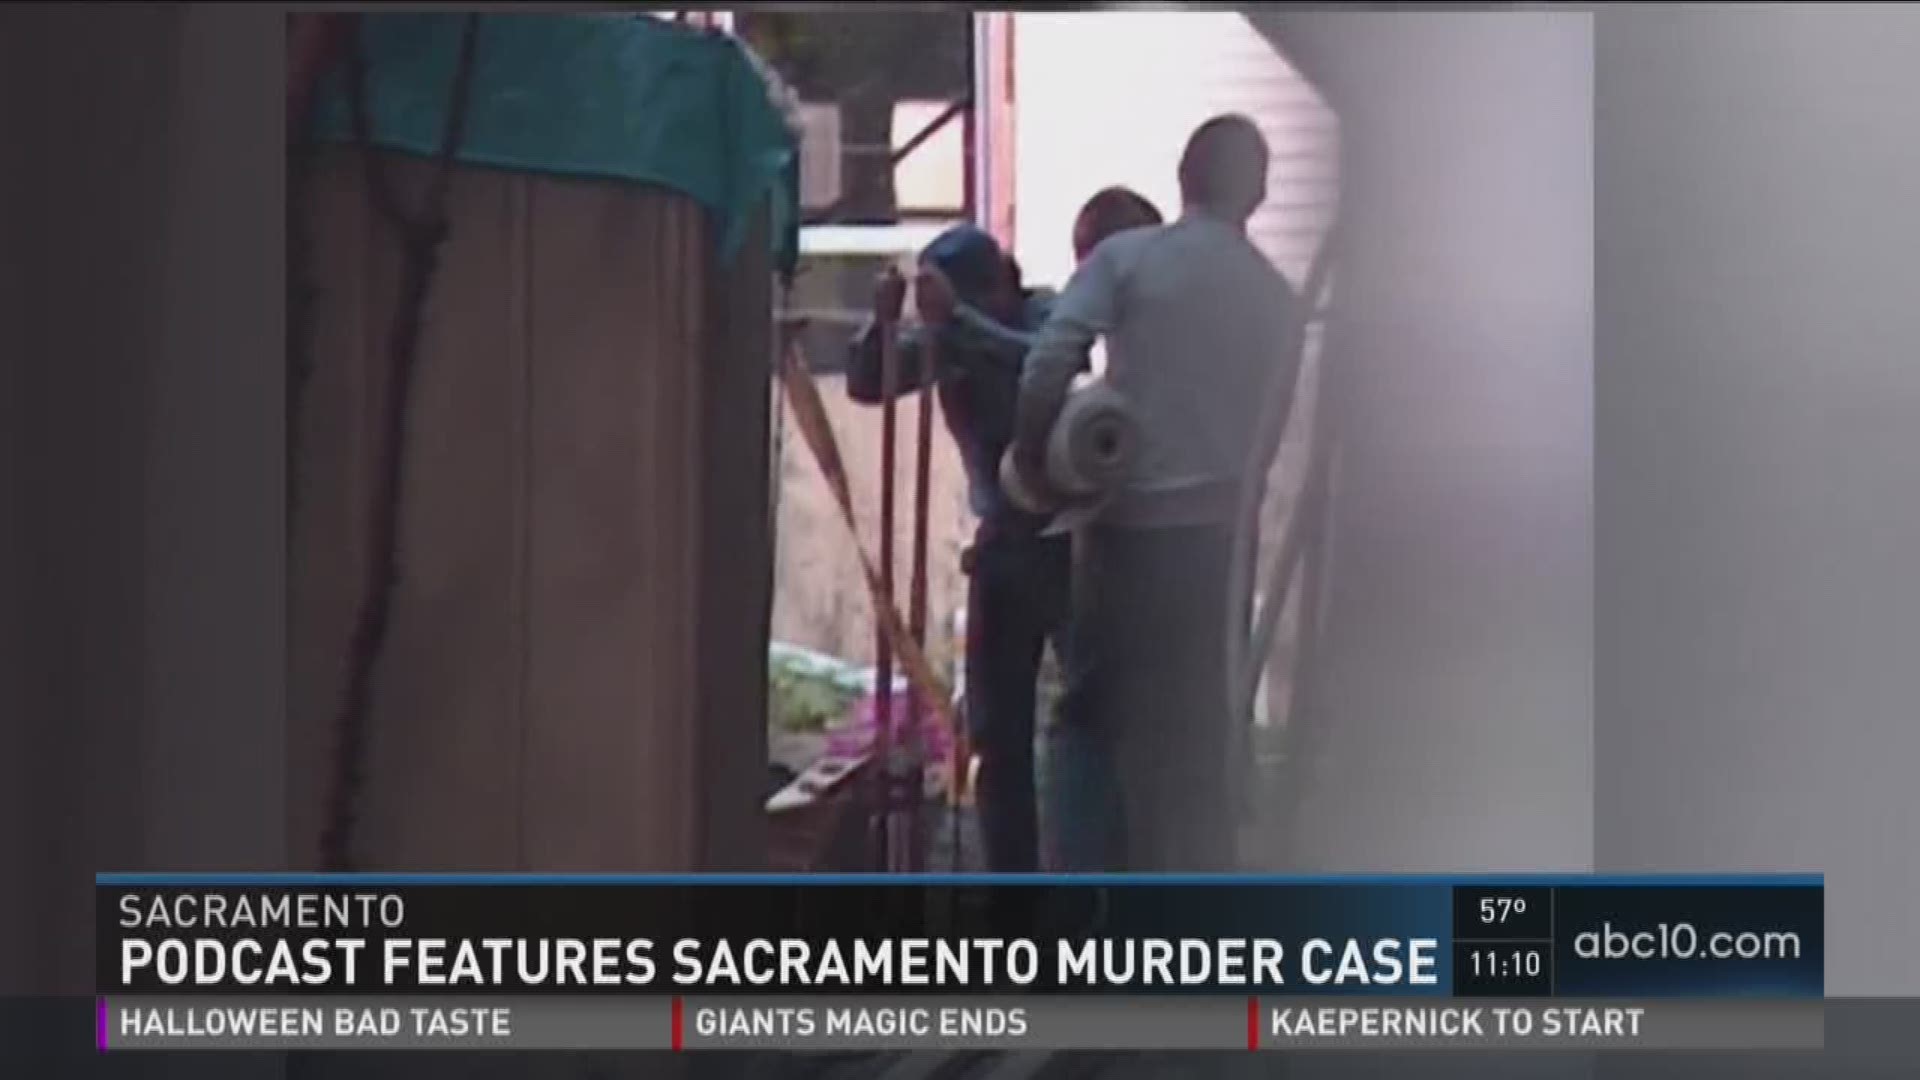 A podcast features Sacramento murder case involving Dorothea Puente. (Ot. 11, 2016)